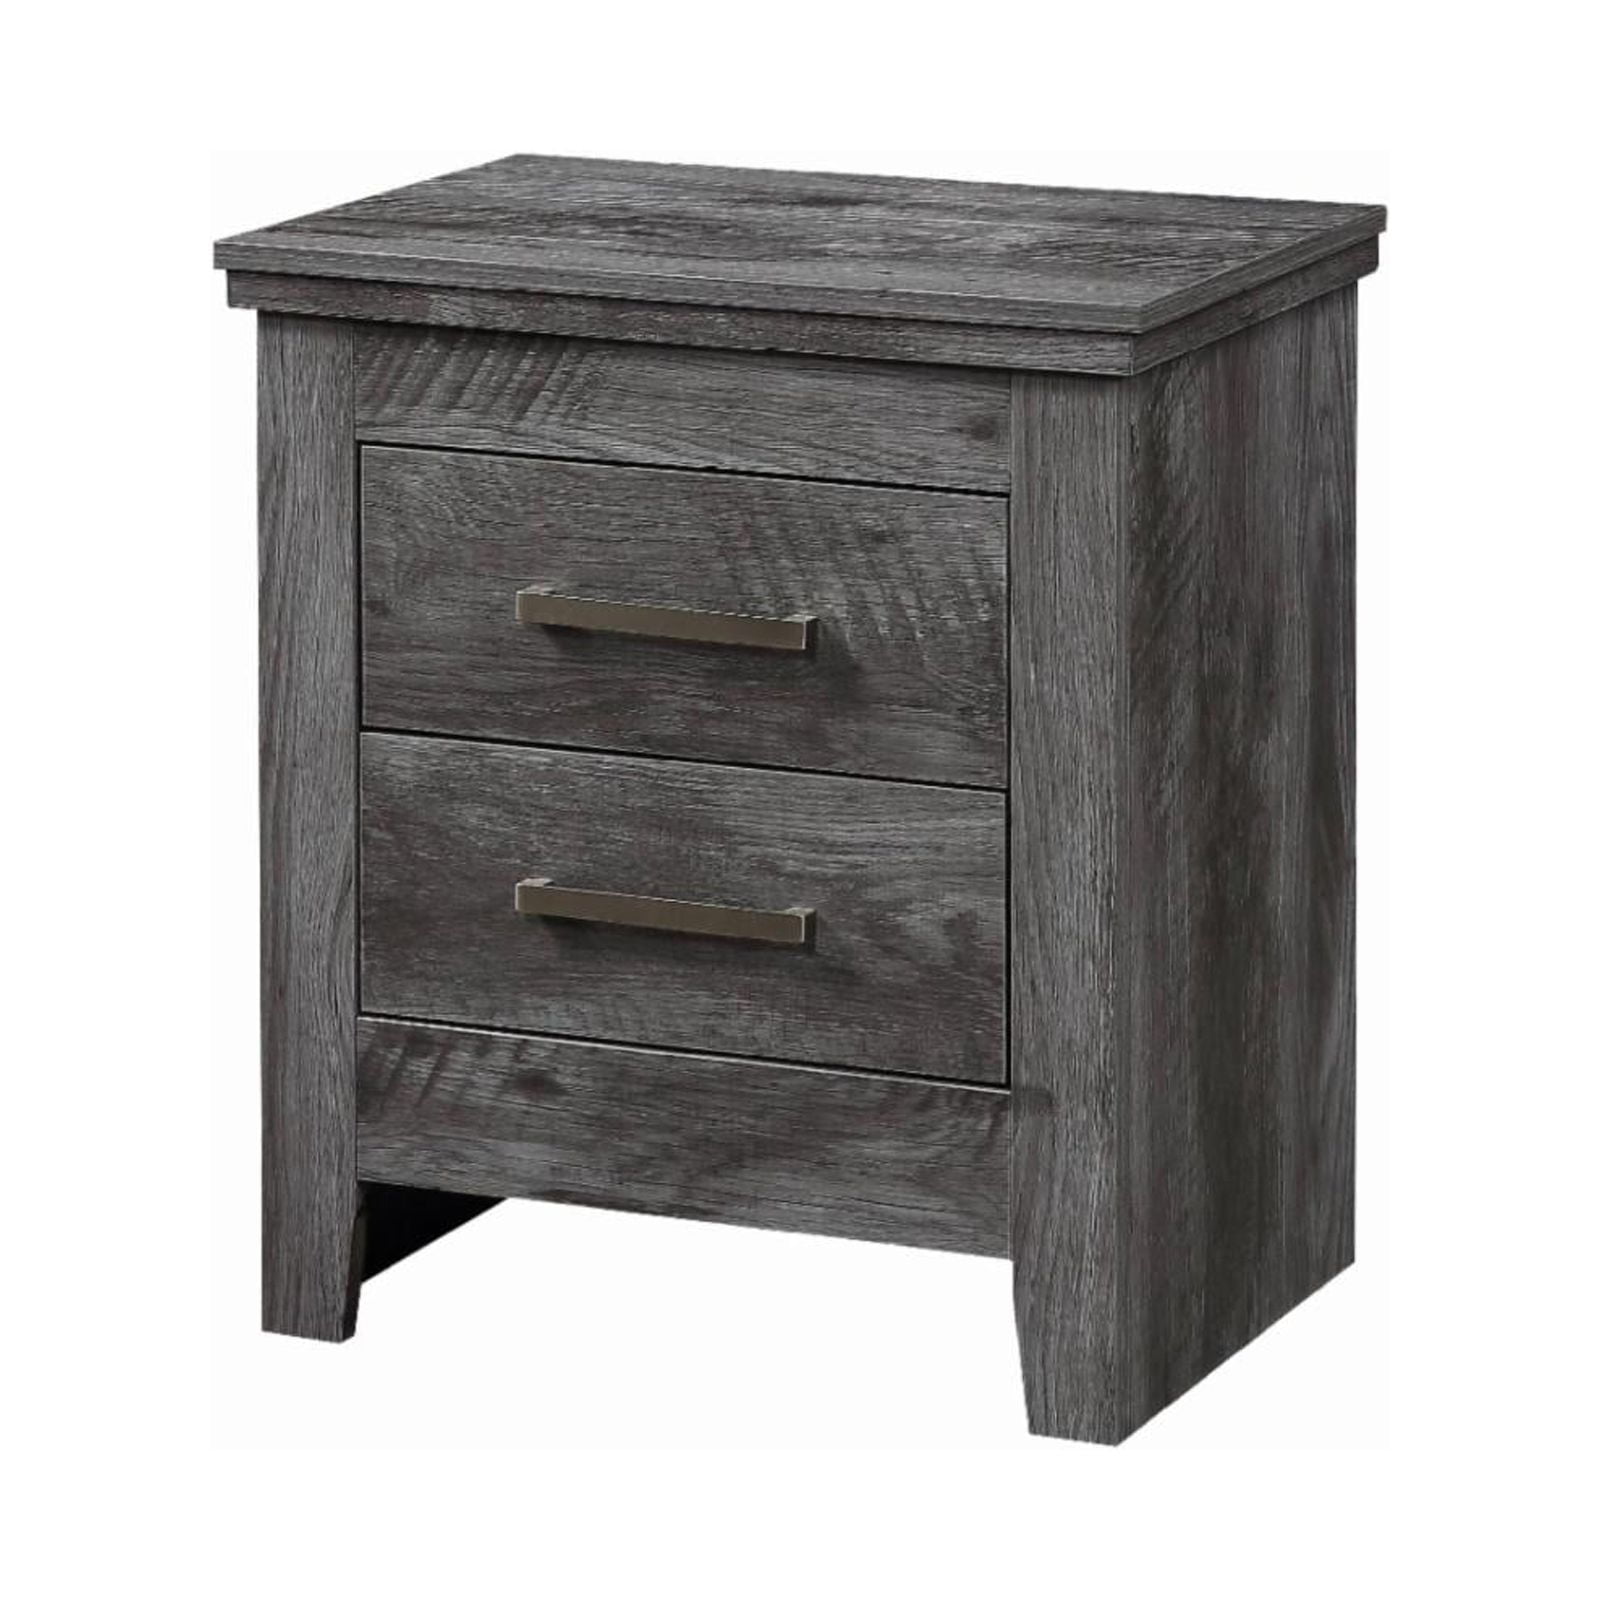 Picture of Acme Furniture 27323 21 x 16 x 24 in. Vidalia Nightstand, Rustic Gray Oak